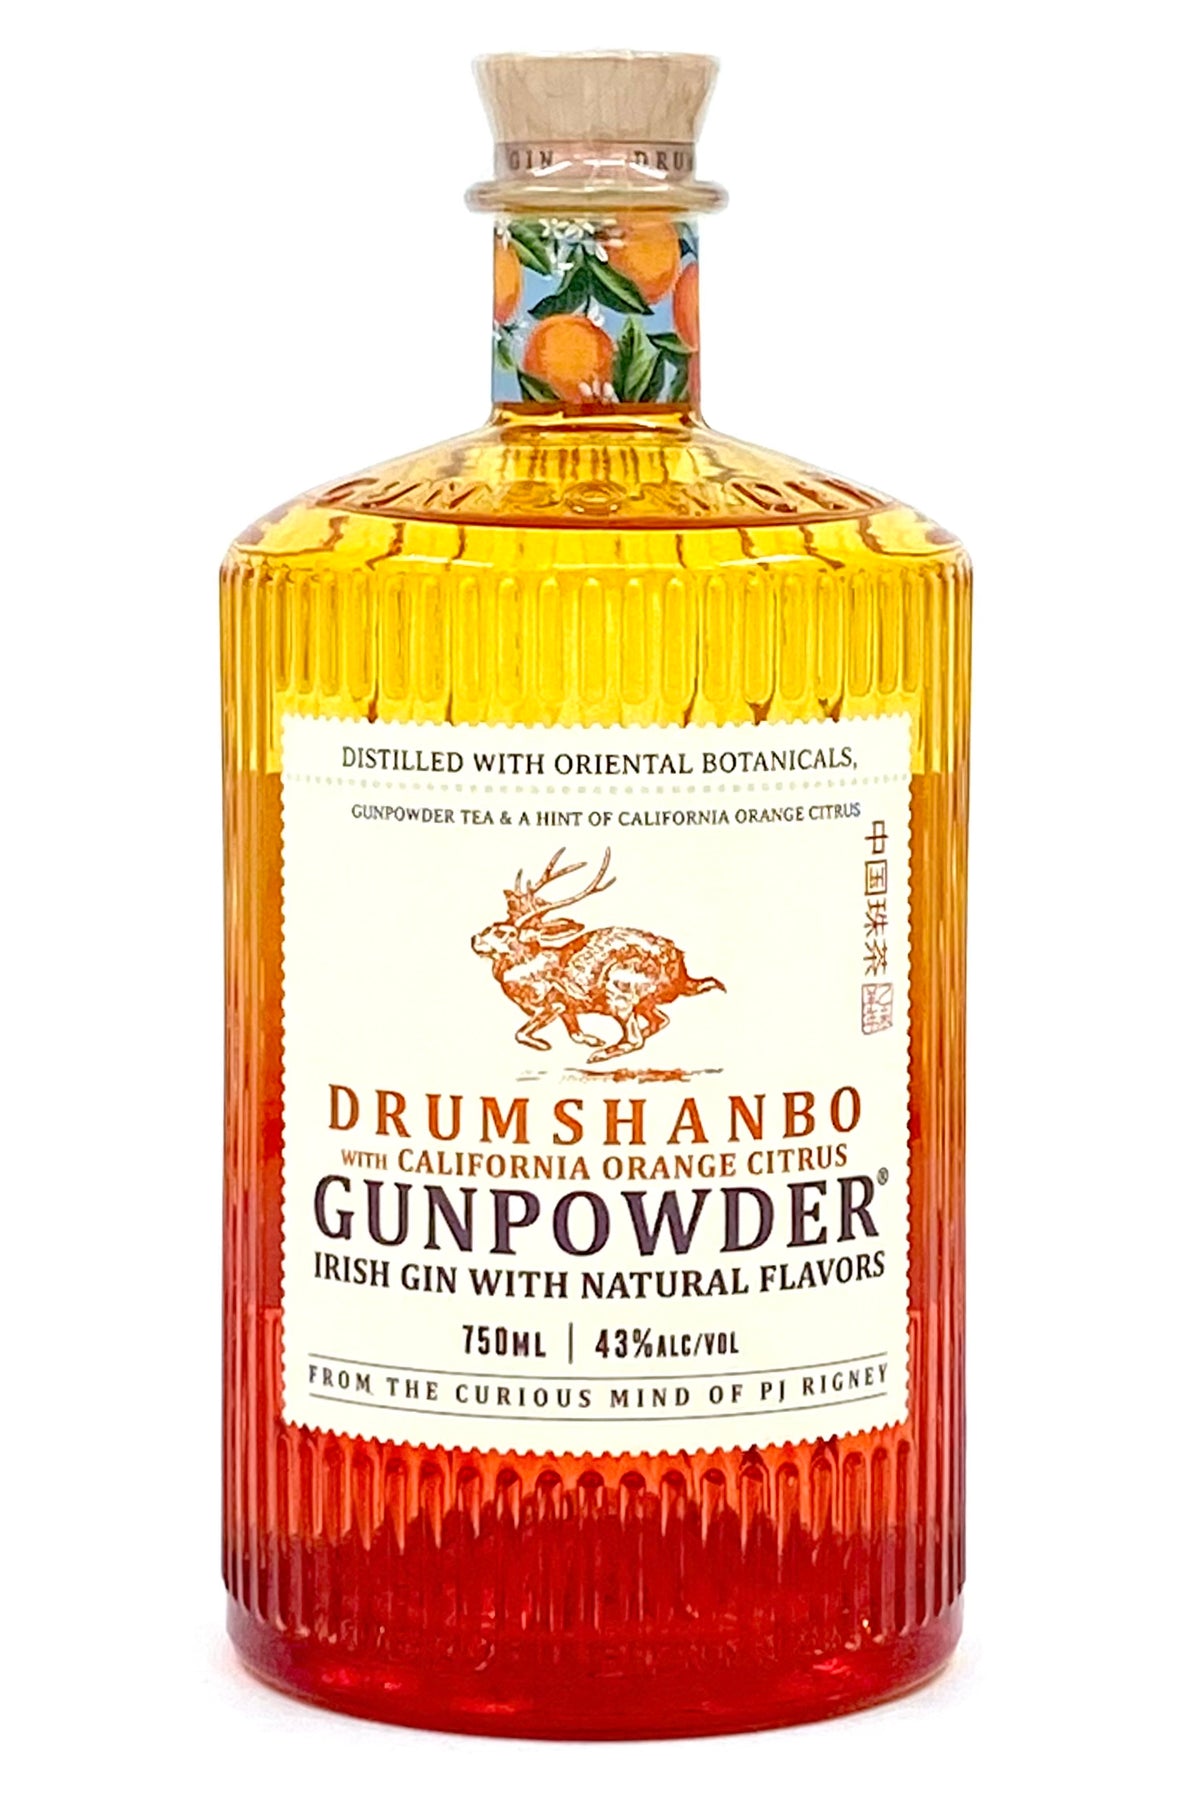 Drumshanbo With Californian Orange Citrus Gunpowder Irish Gin